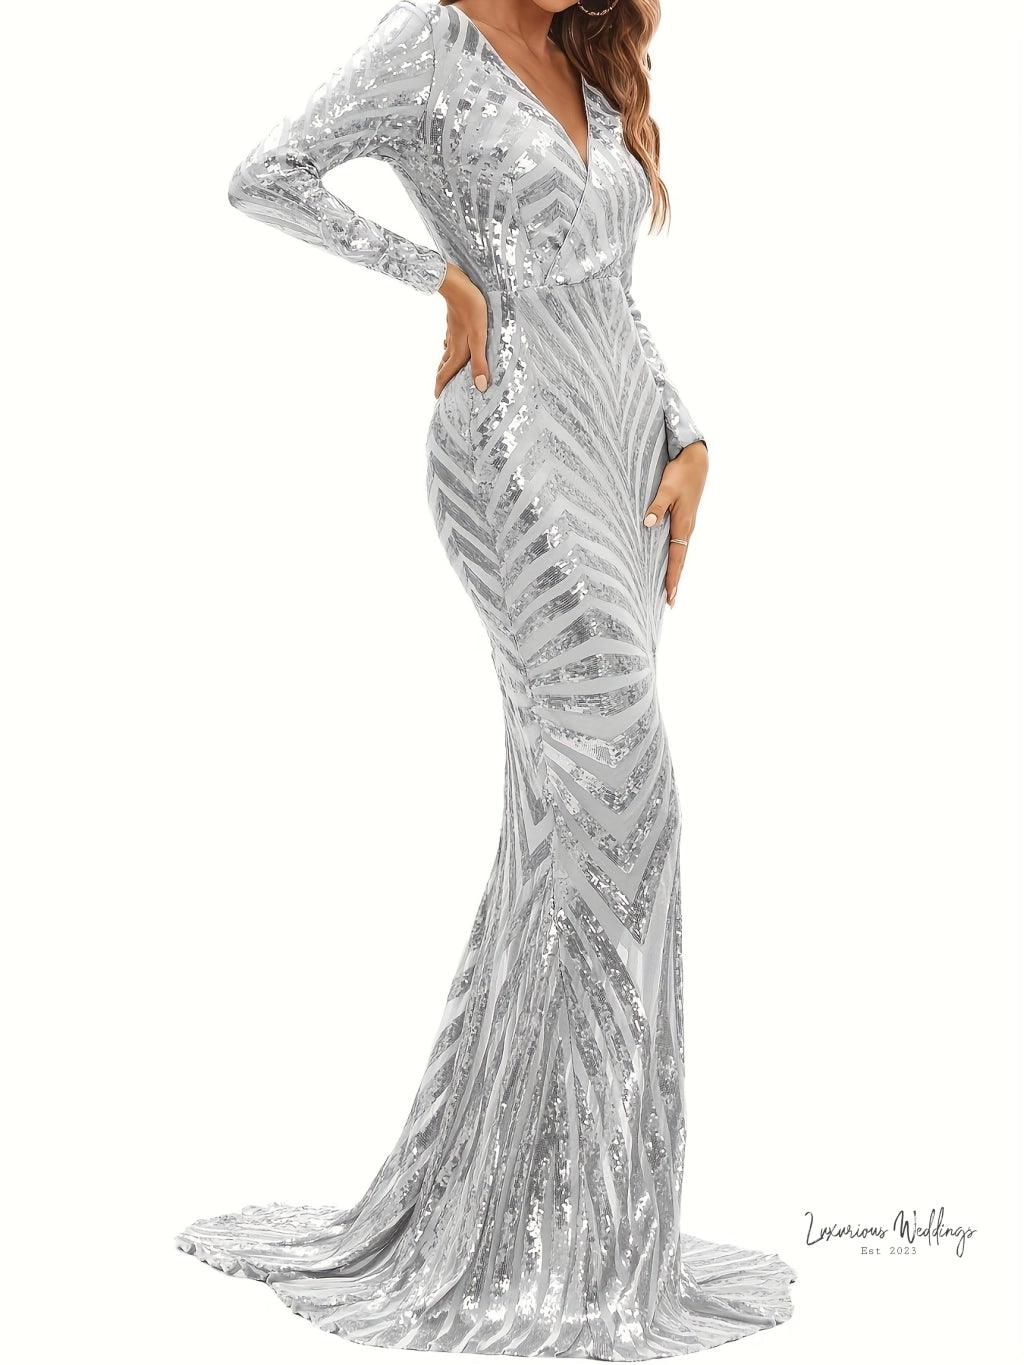 Sparkling V-neck Mermaid Dress - Long Sleeve Party & Banquet Attire - Luxurious Weddings